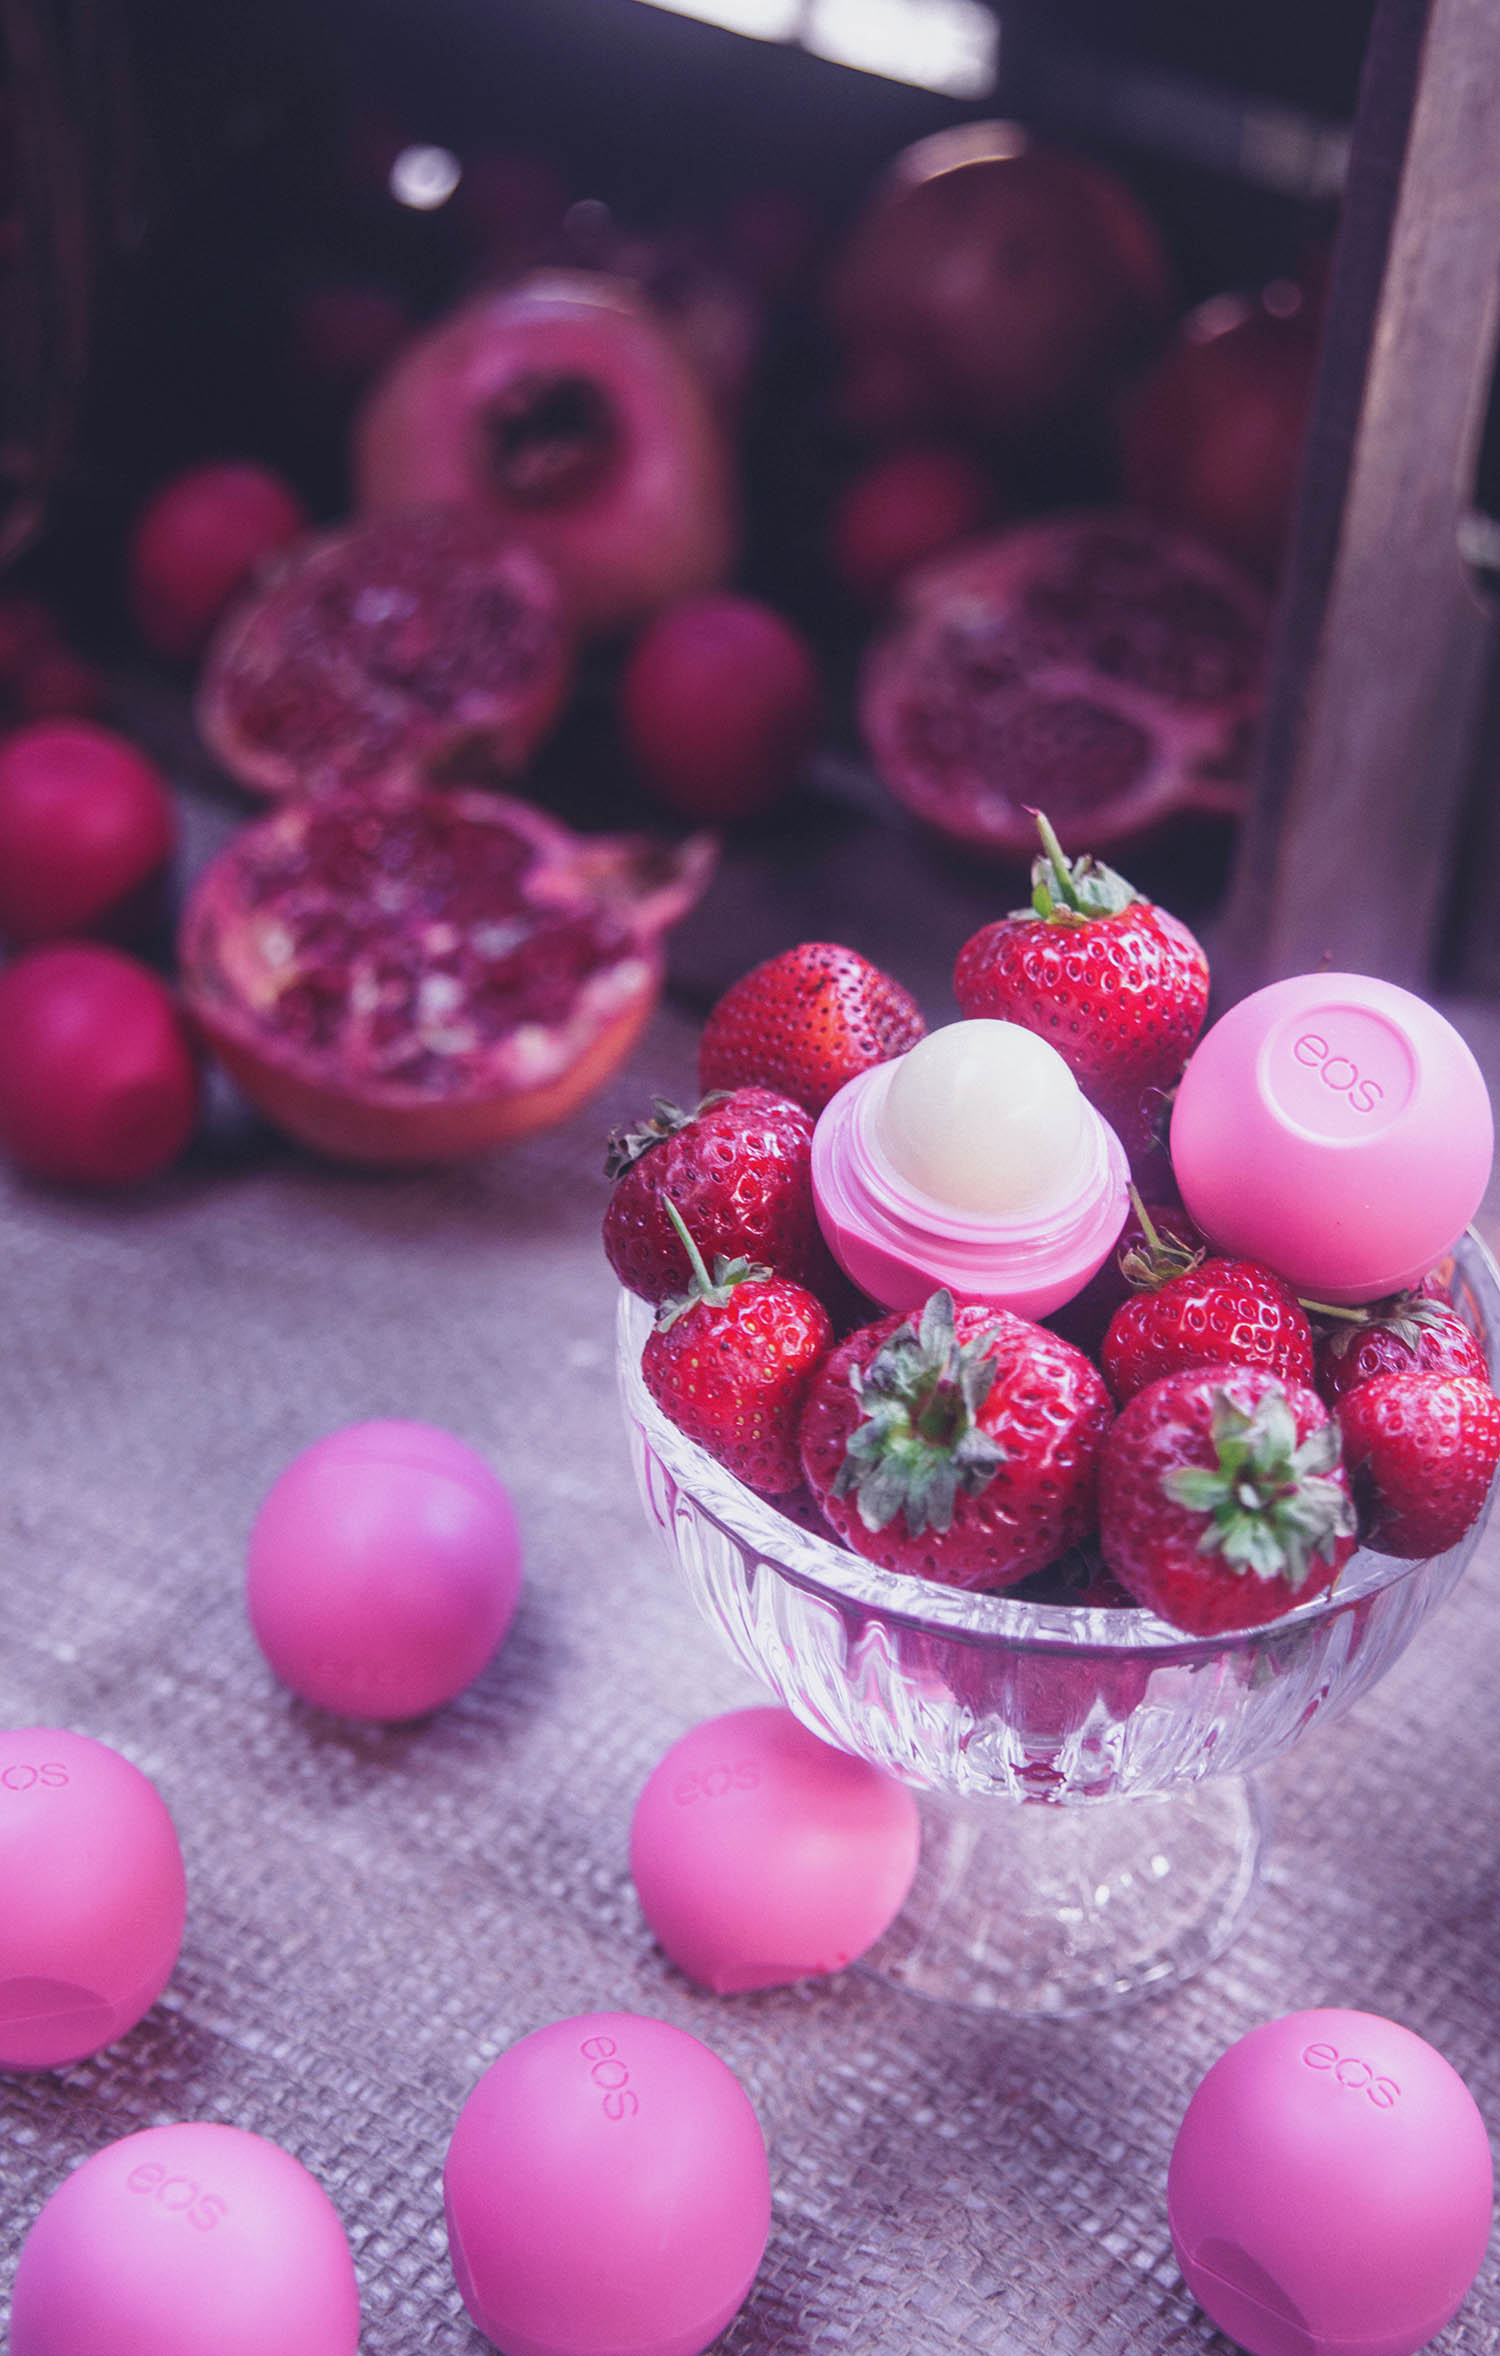 Smooth Sphere Organic Lip Balm Strawberry Sorbet